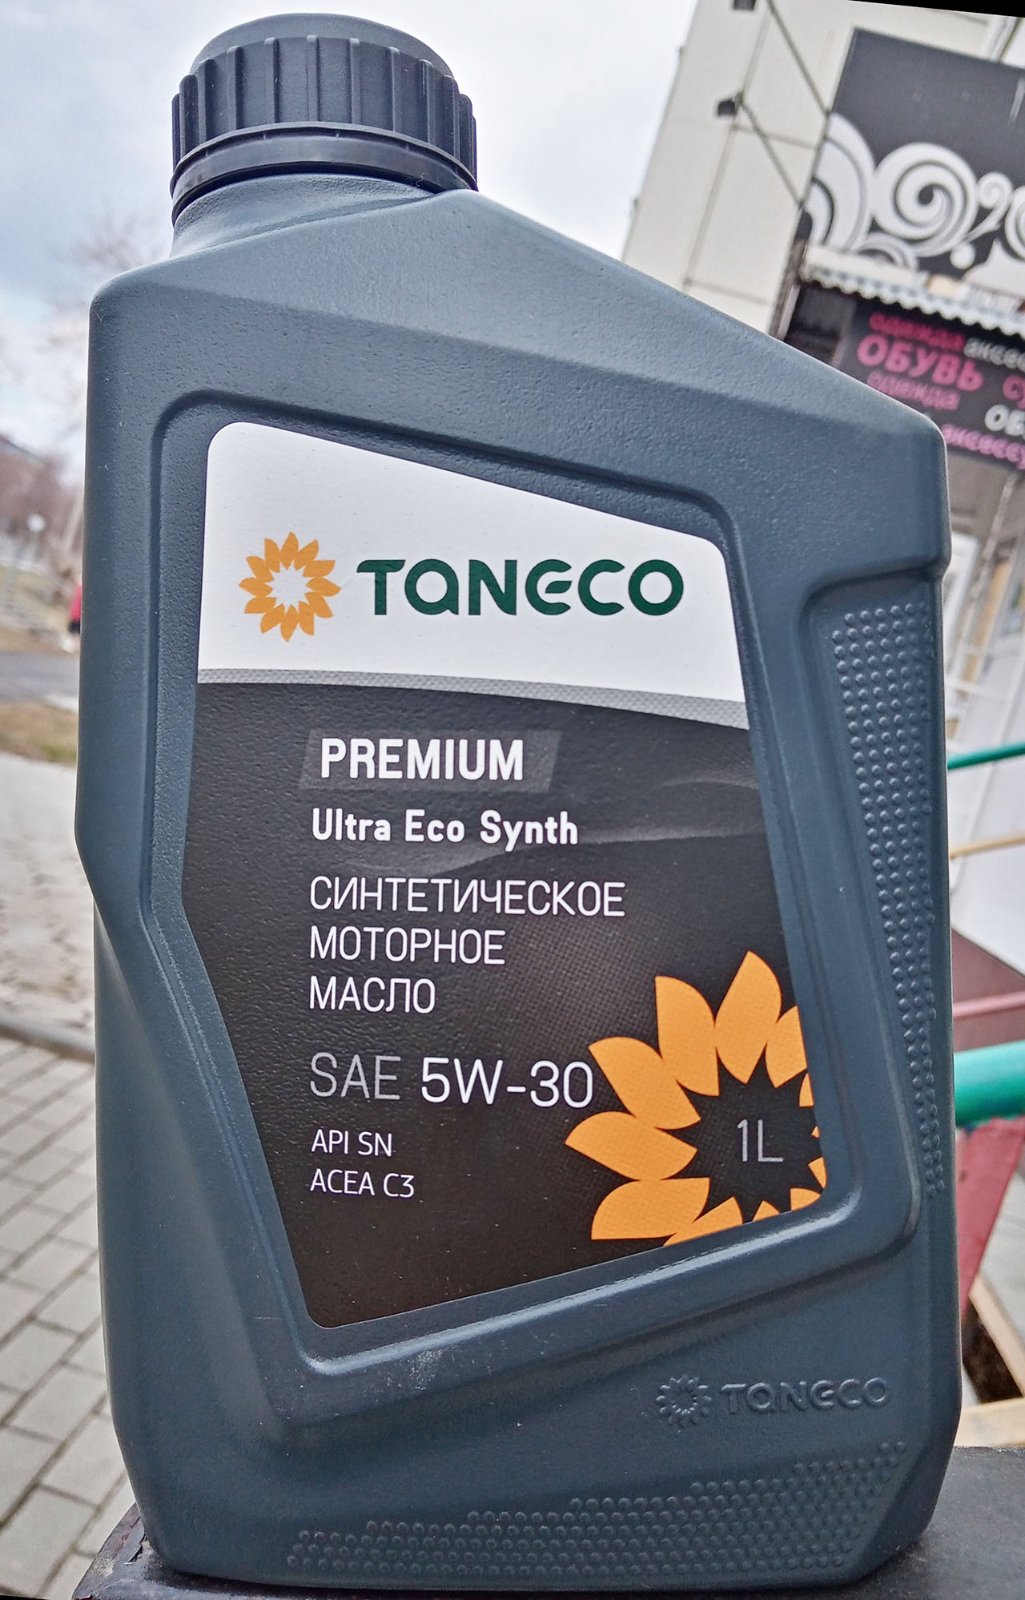 Taneco Premium Ultra Eco Synth 5W-30 photo1.jpg